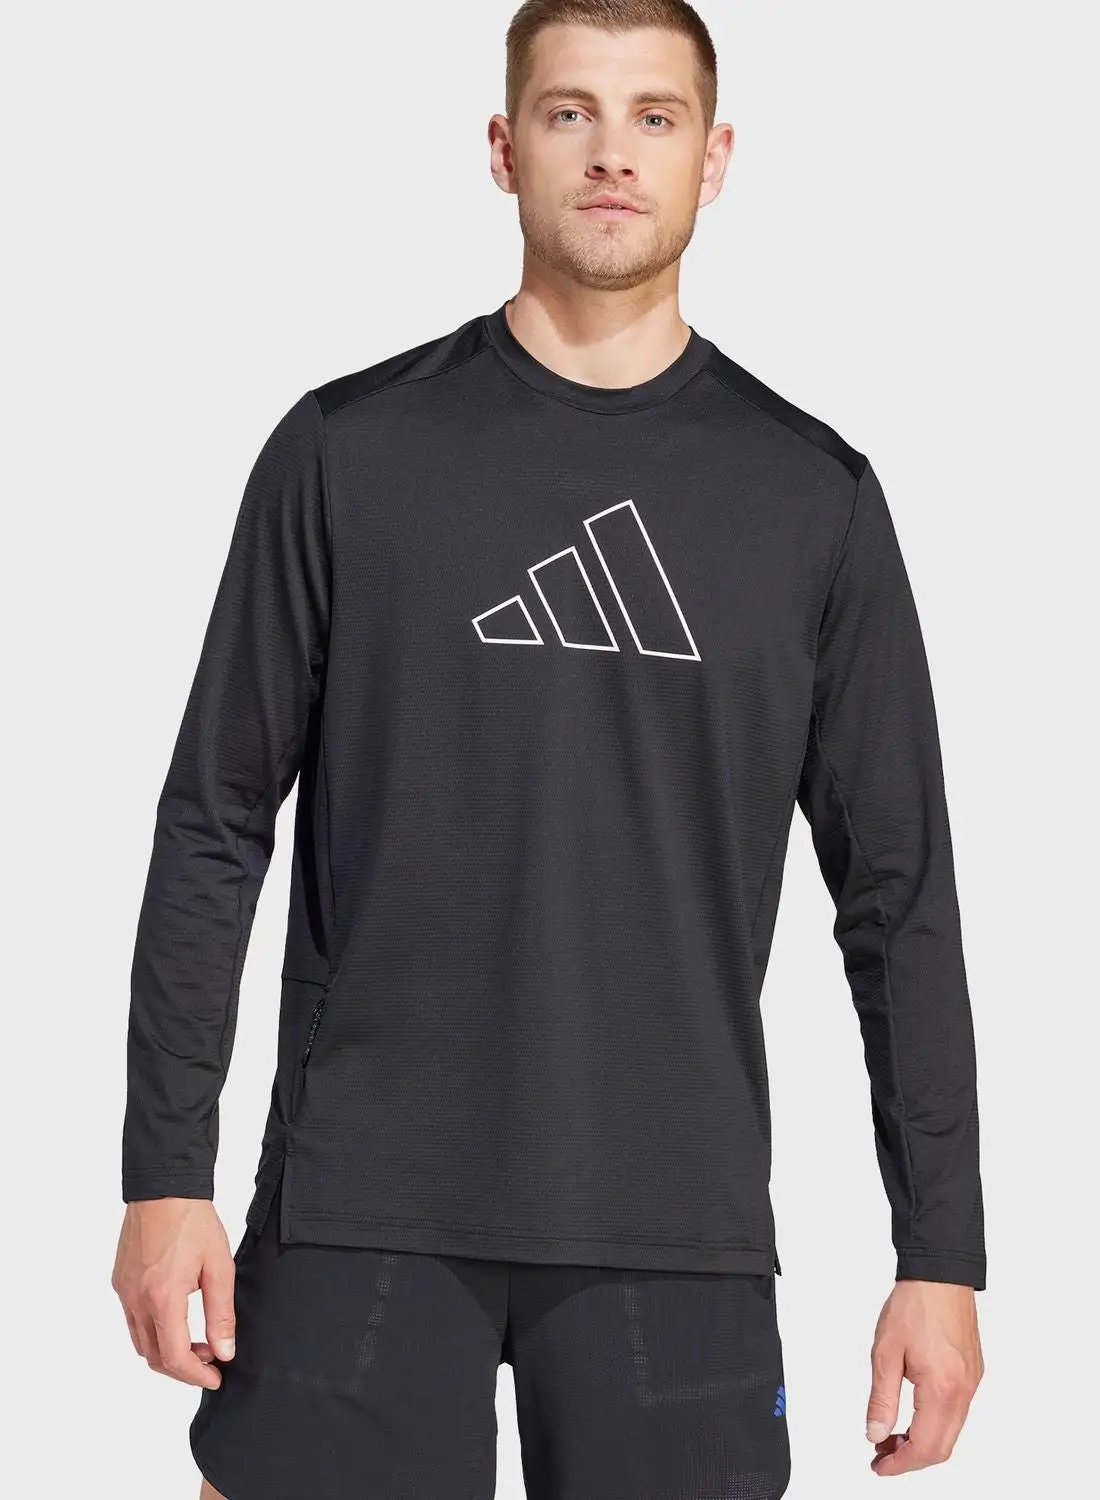 Adidas Essential T-Shirt